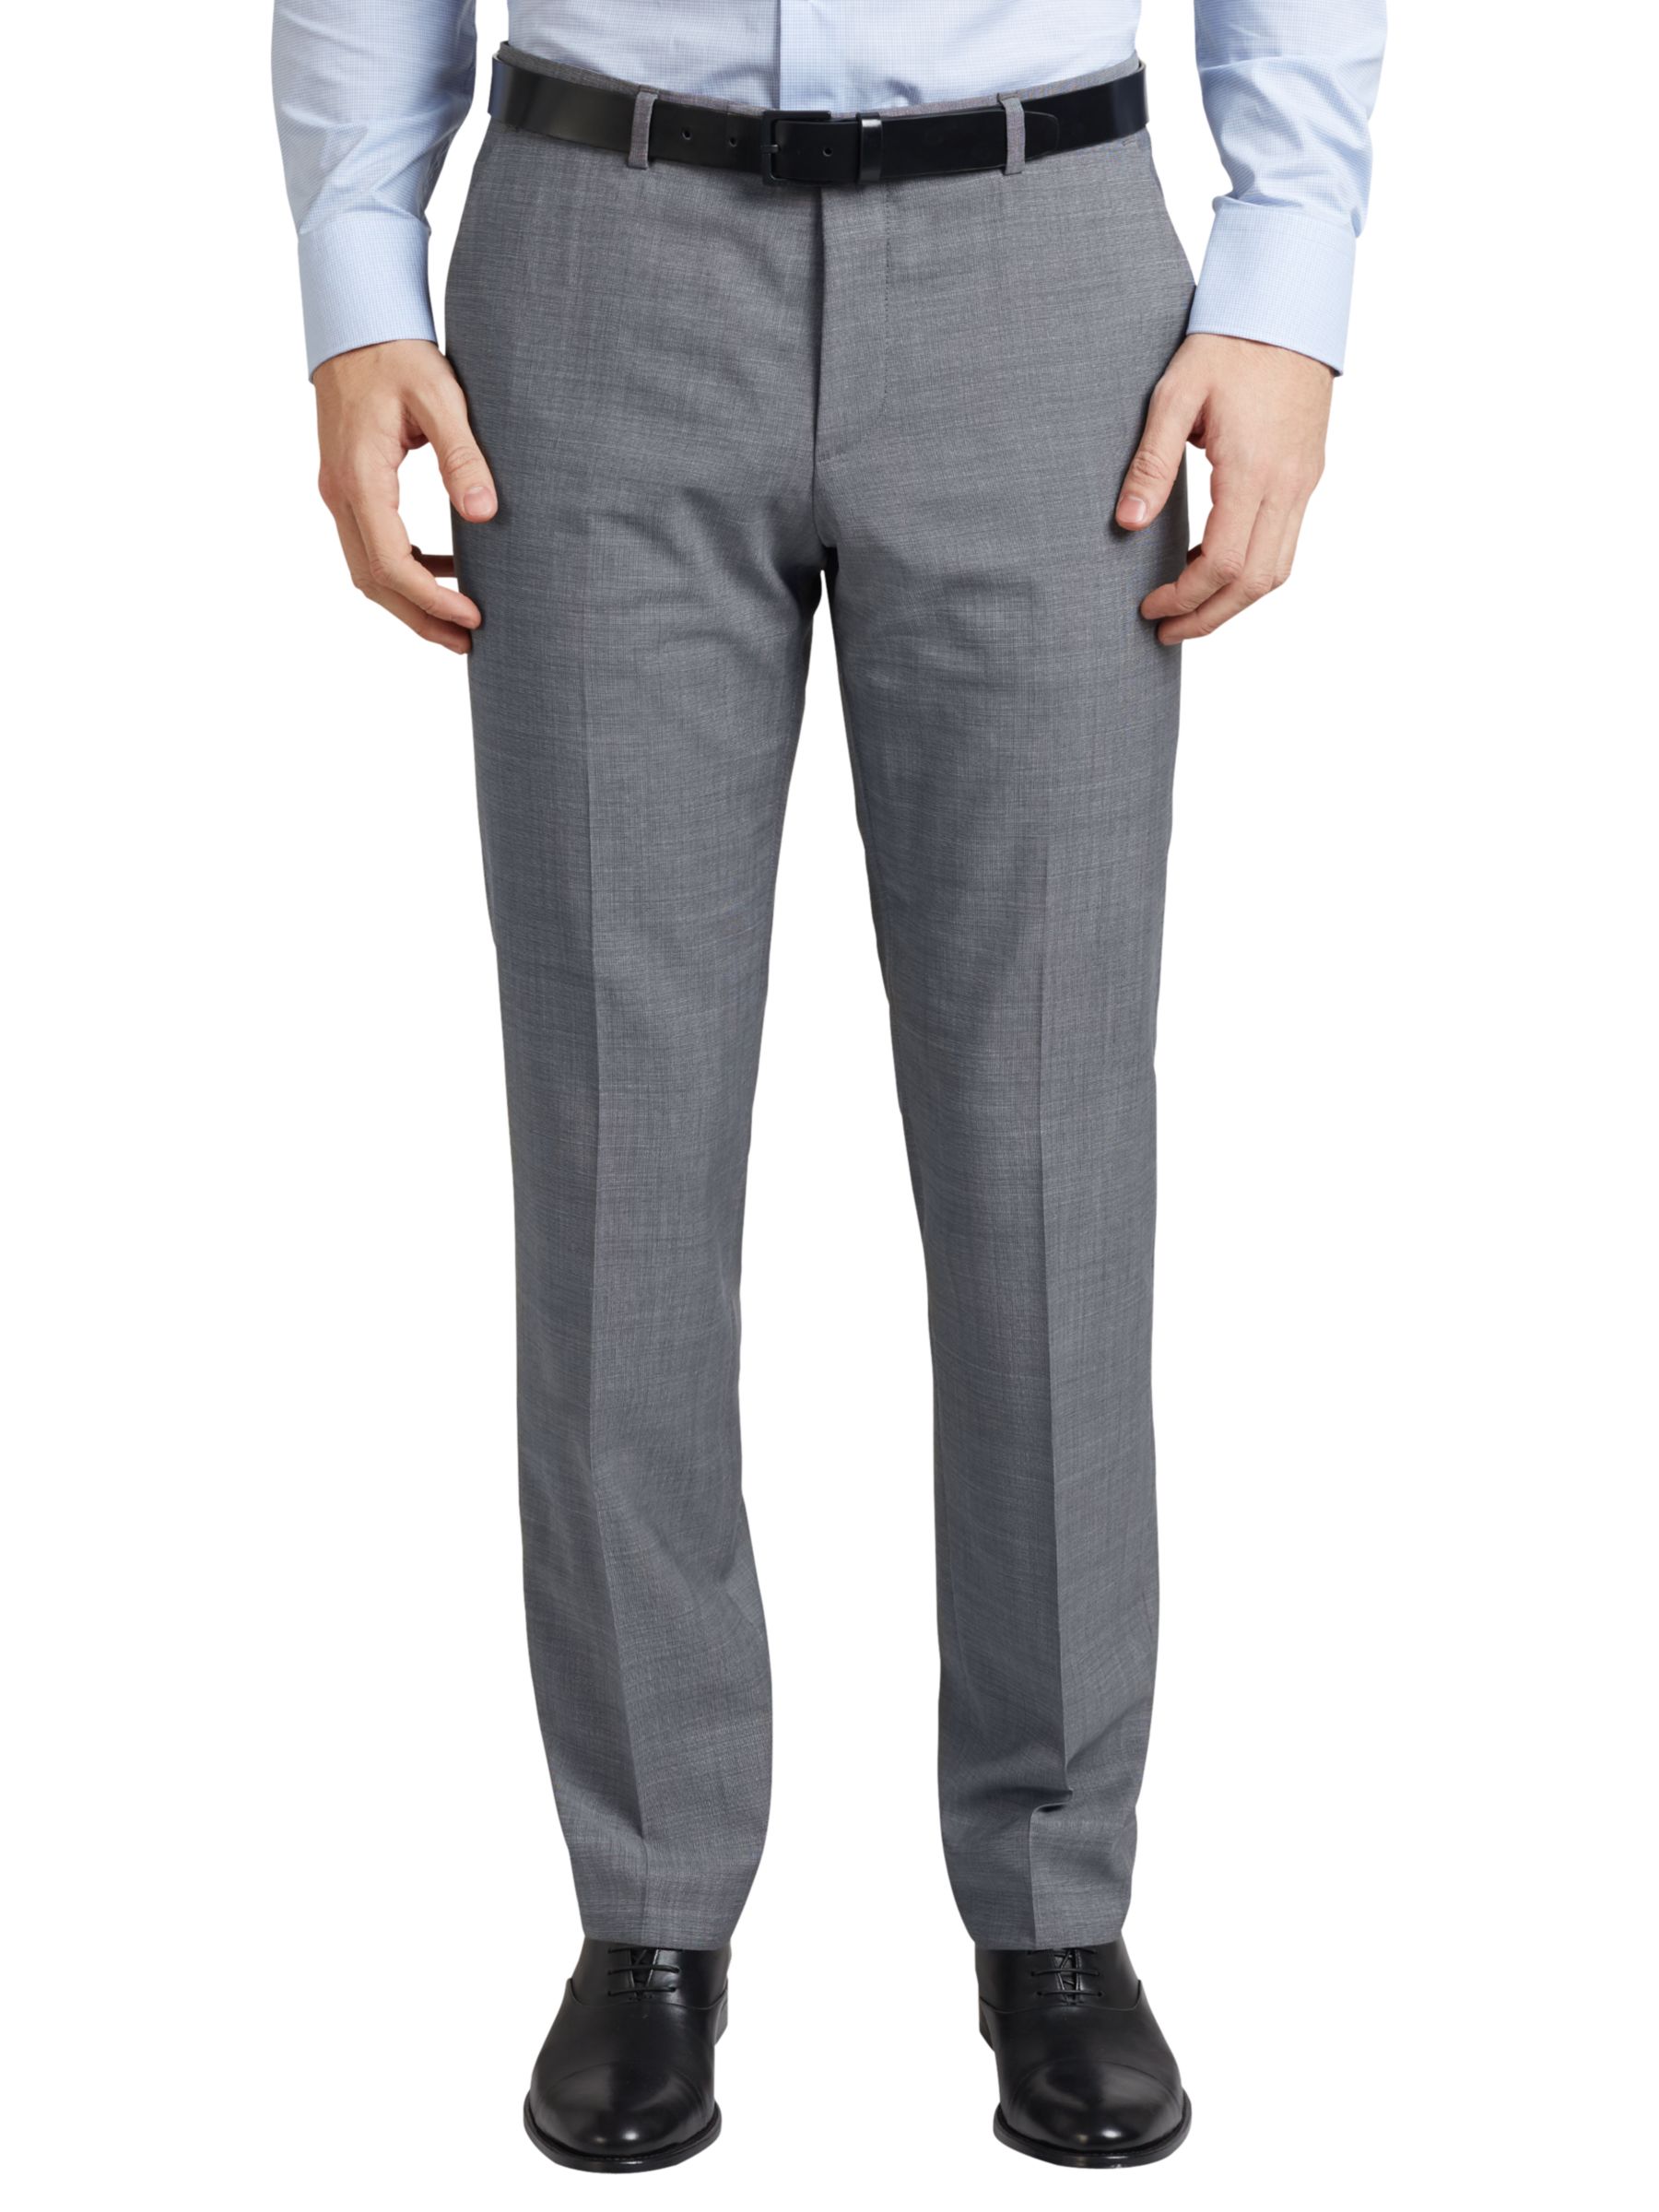 HUGO by Hugo Boss C-Jeffery Textured Wool Regular Fit Suit Trousers, Grey